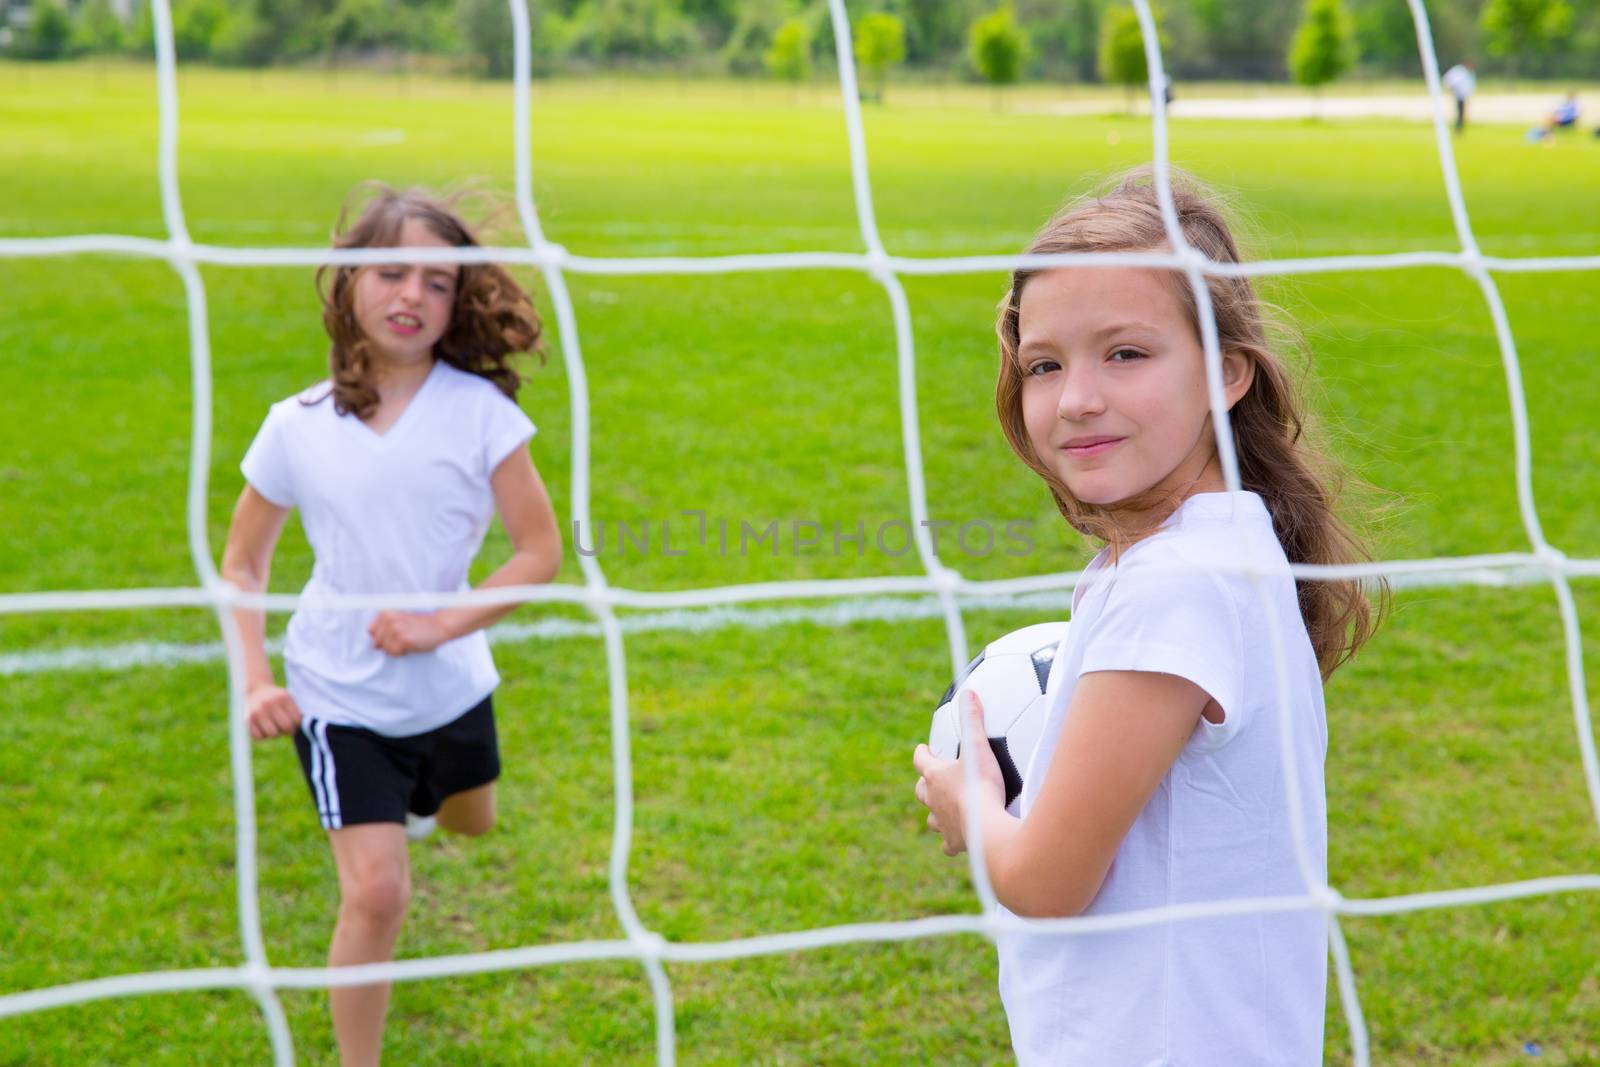 Soccer football kid girls playing on field by lunamarina